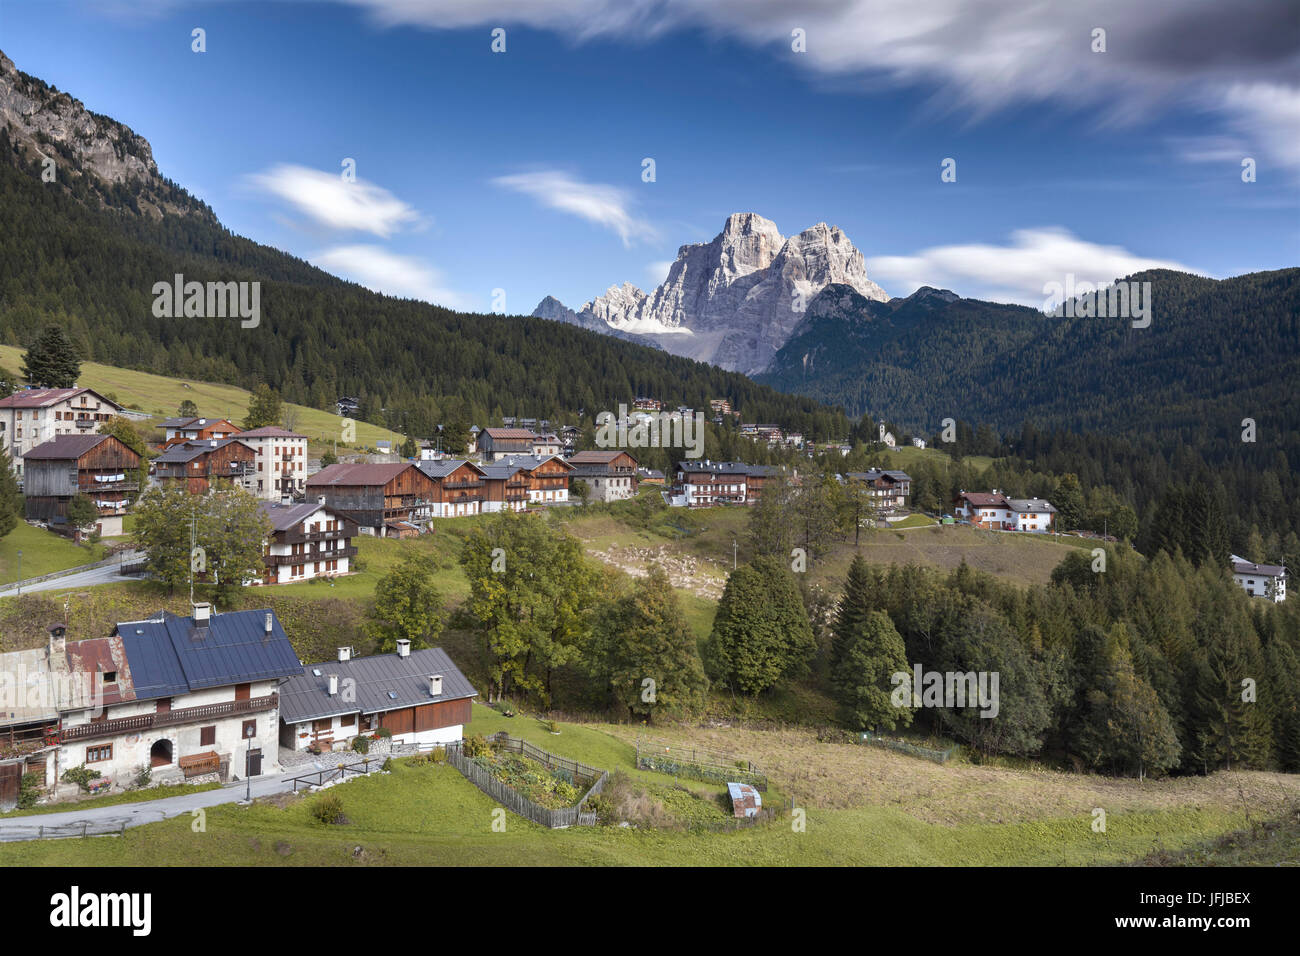 Europe, Italy, Veneto, Belluno, View of Santa Fosca, Selva di Cadore, with the mount Pelmo on the background, Dolomites Stock Photo